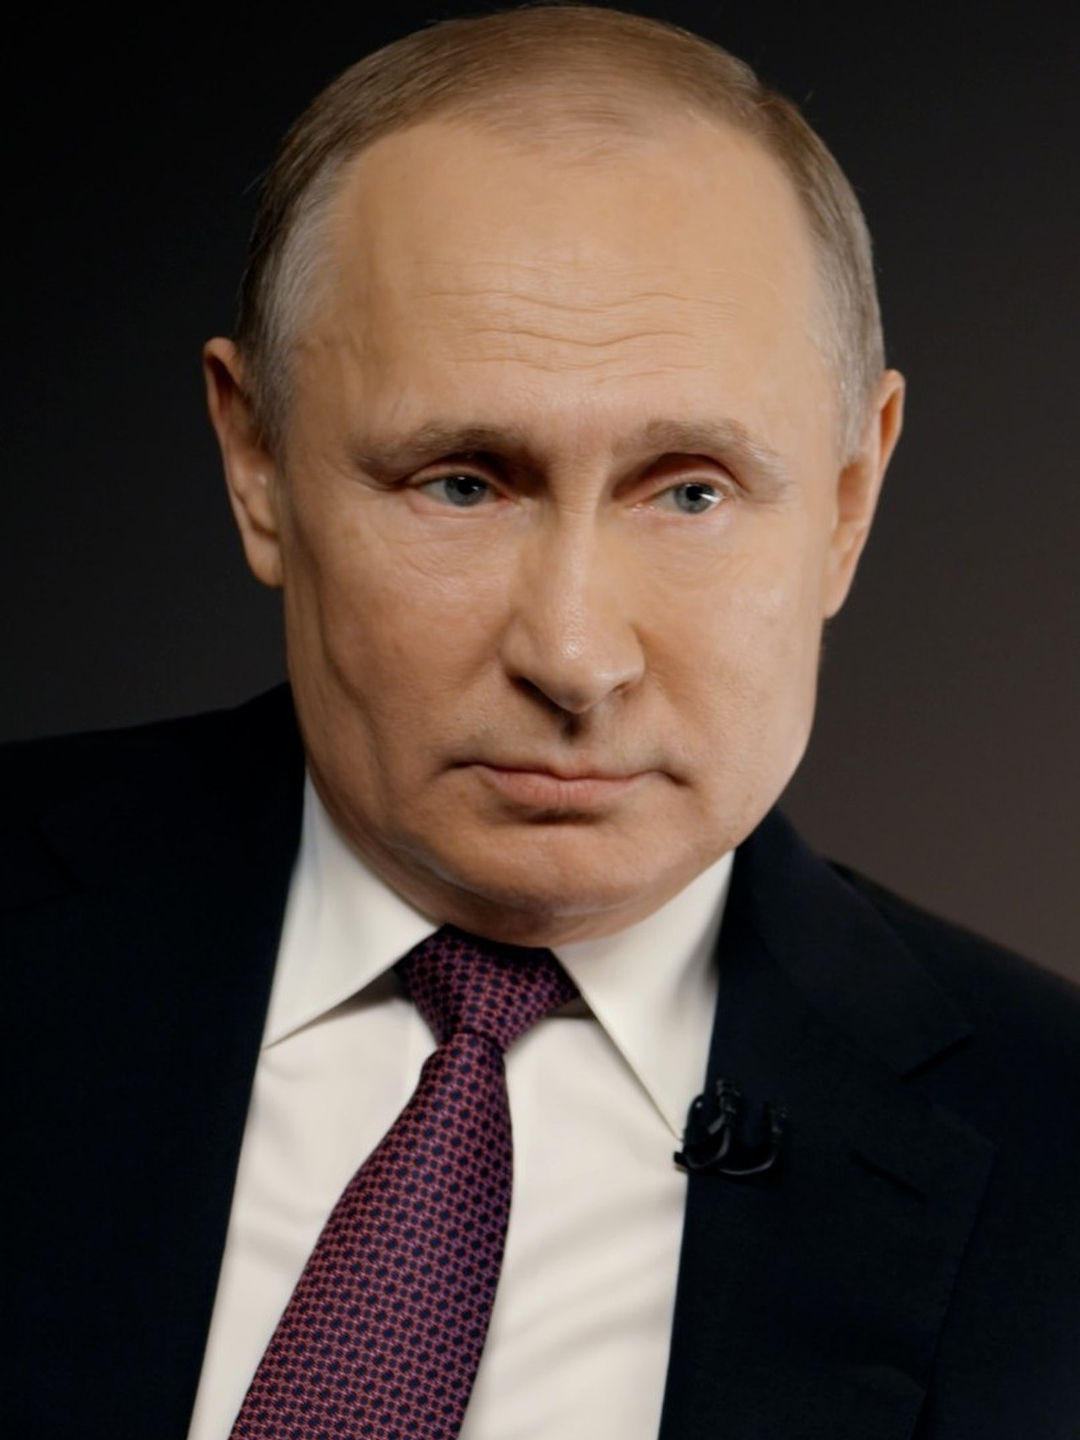 Vladimir Putin young age